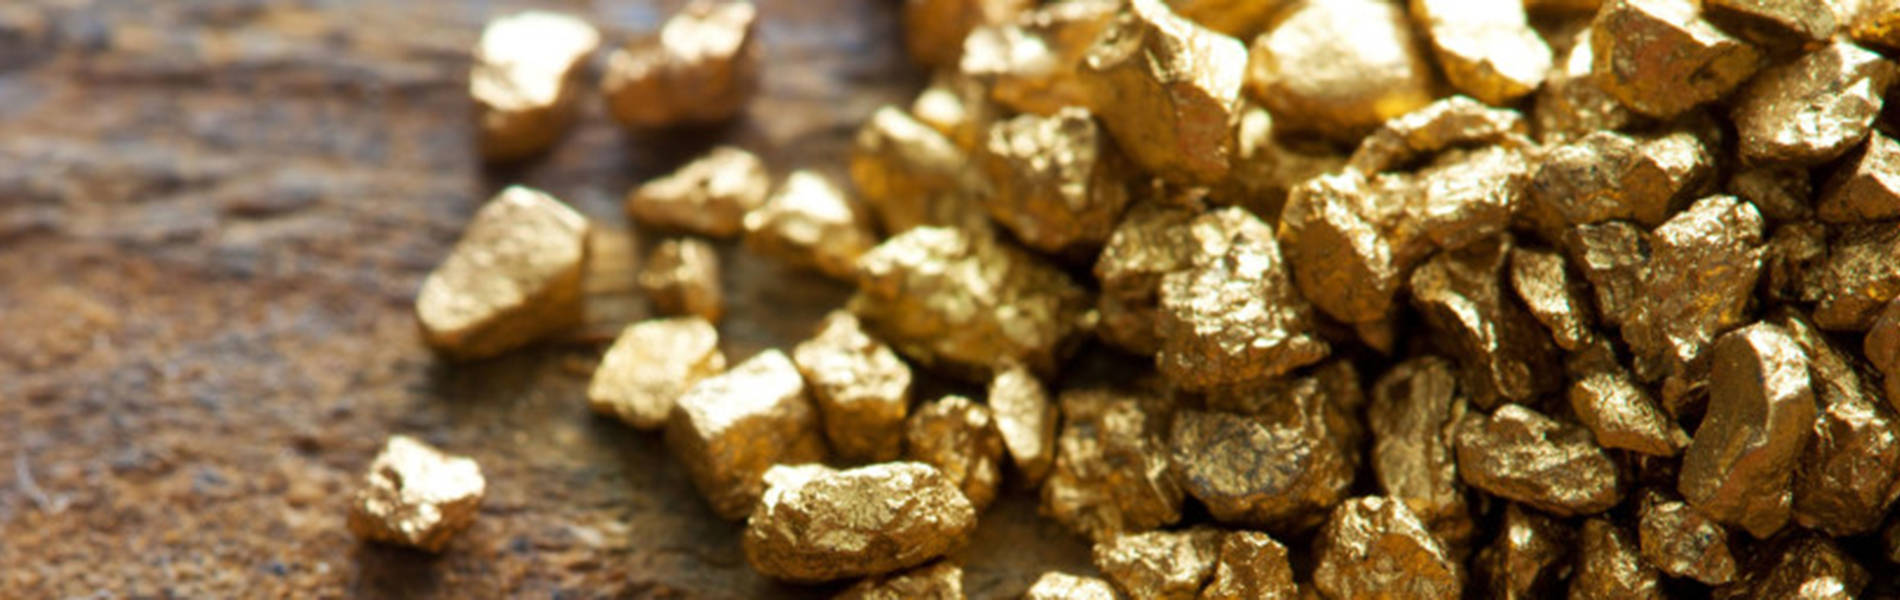 Goldmines' Gold Nuggets Horizontal Photo Wallpaper